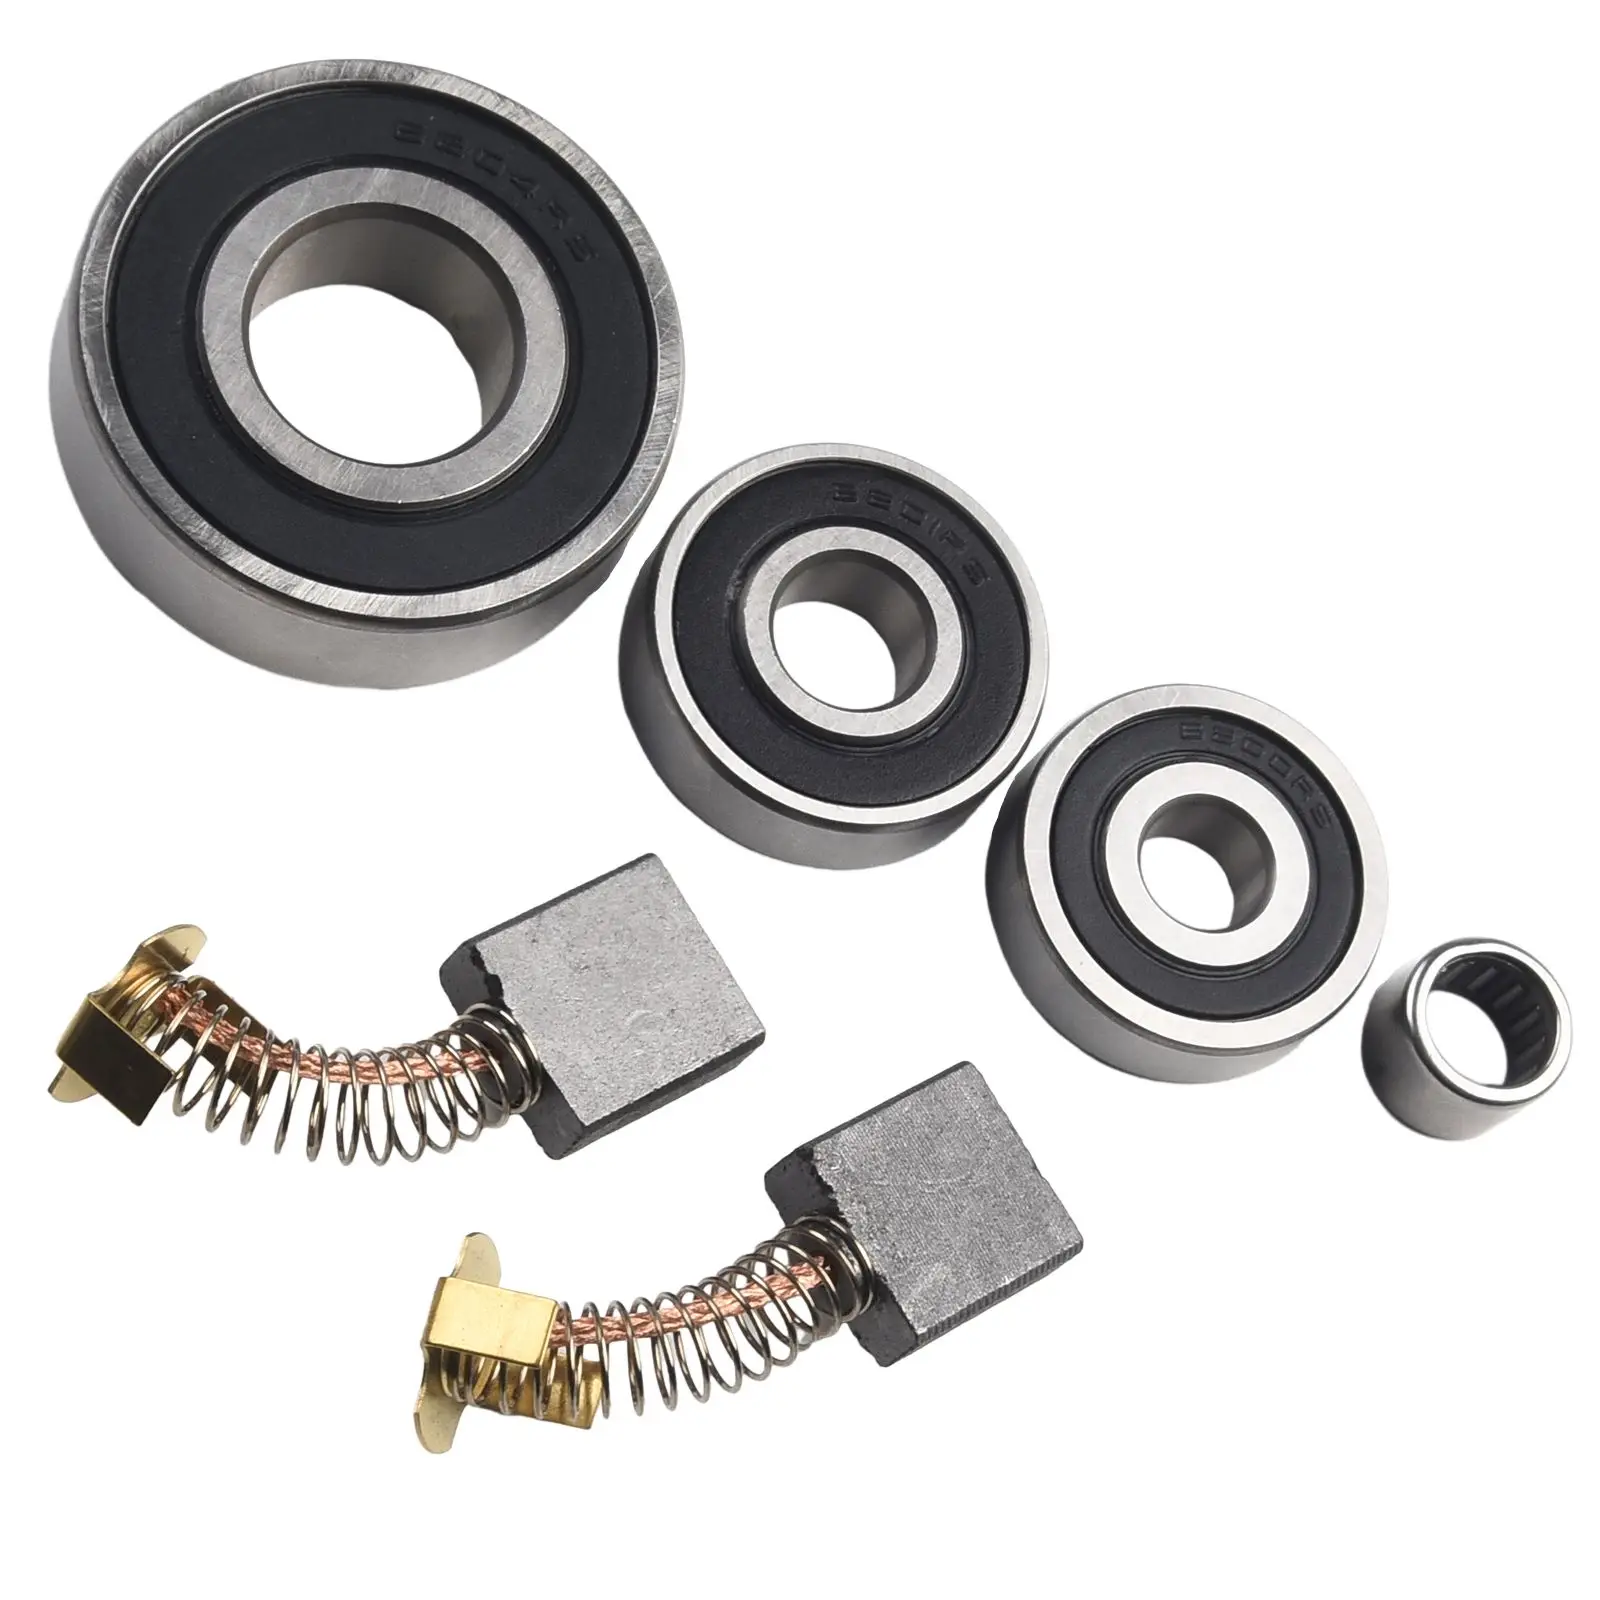 

6pcs Motor Rebuild Kit For Craftsman RM871 Replacement Silver Motor Bearing Rebuild Set Power Tools Accessories